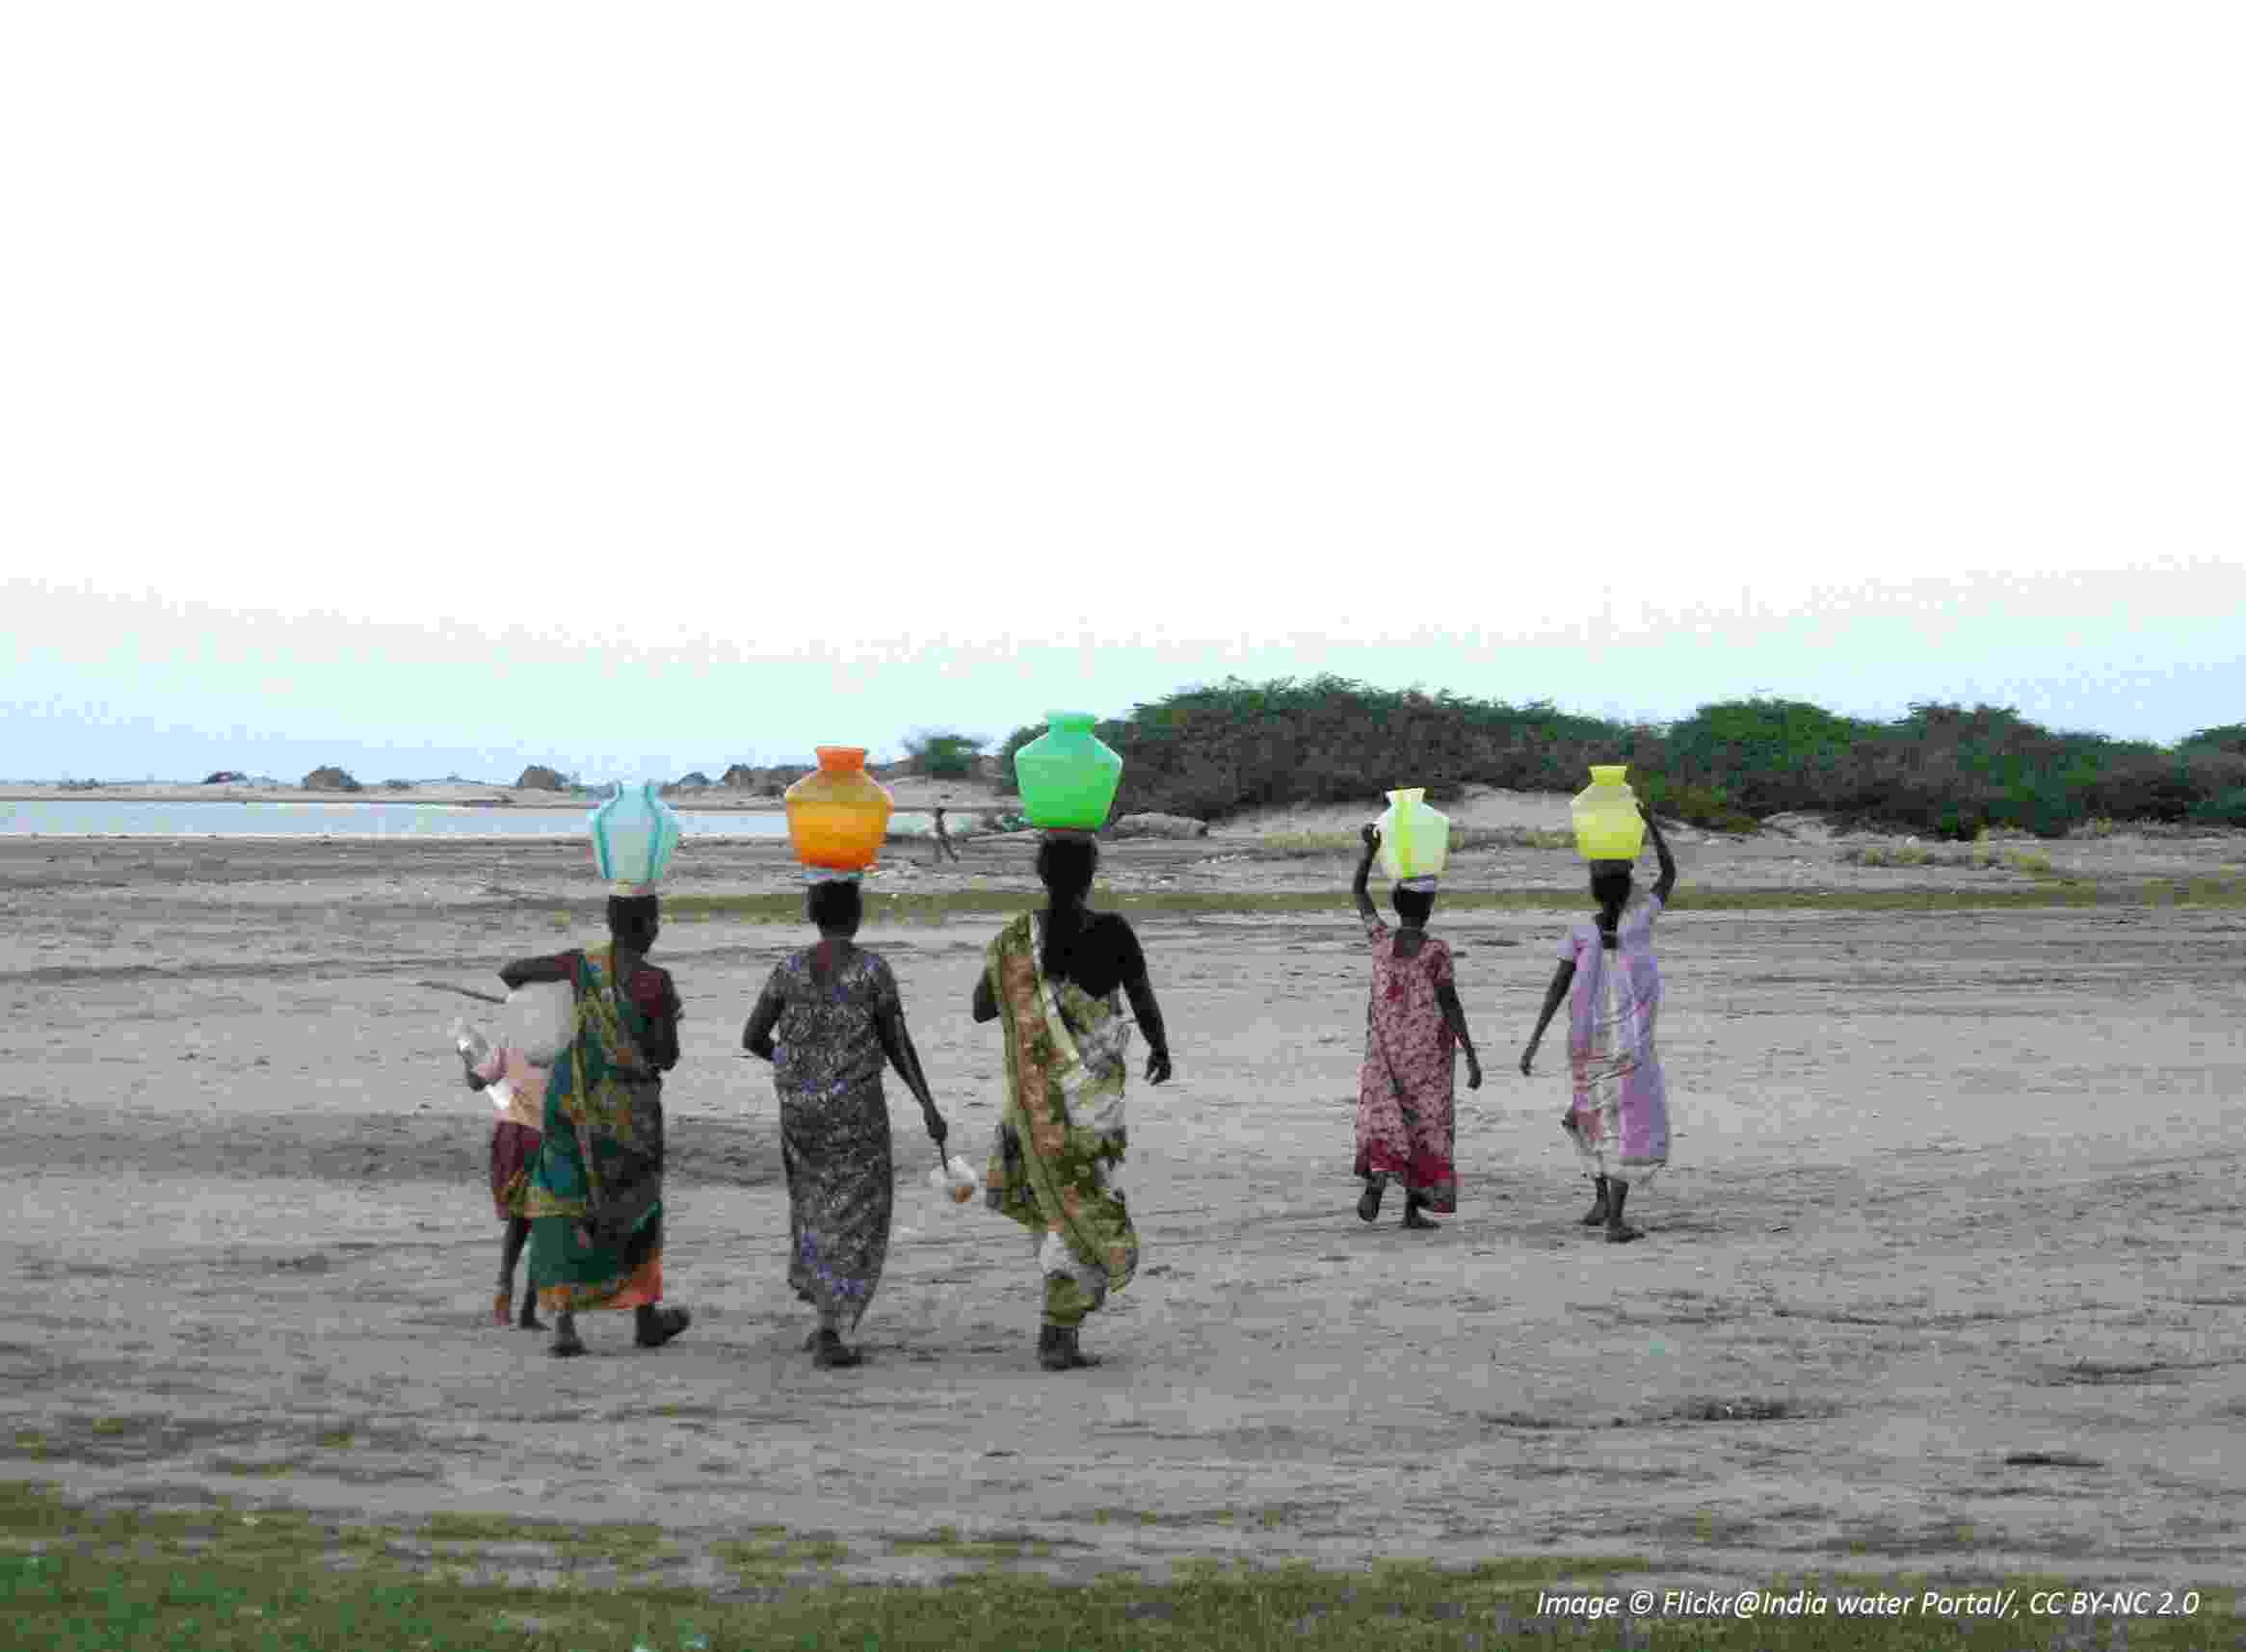 Five women walk away across dry, open land, each carrying water in a colourful vessel on their head